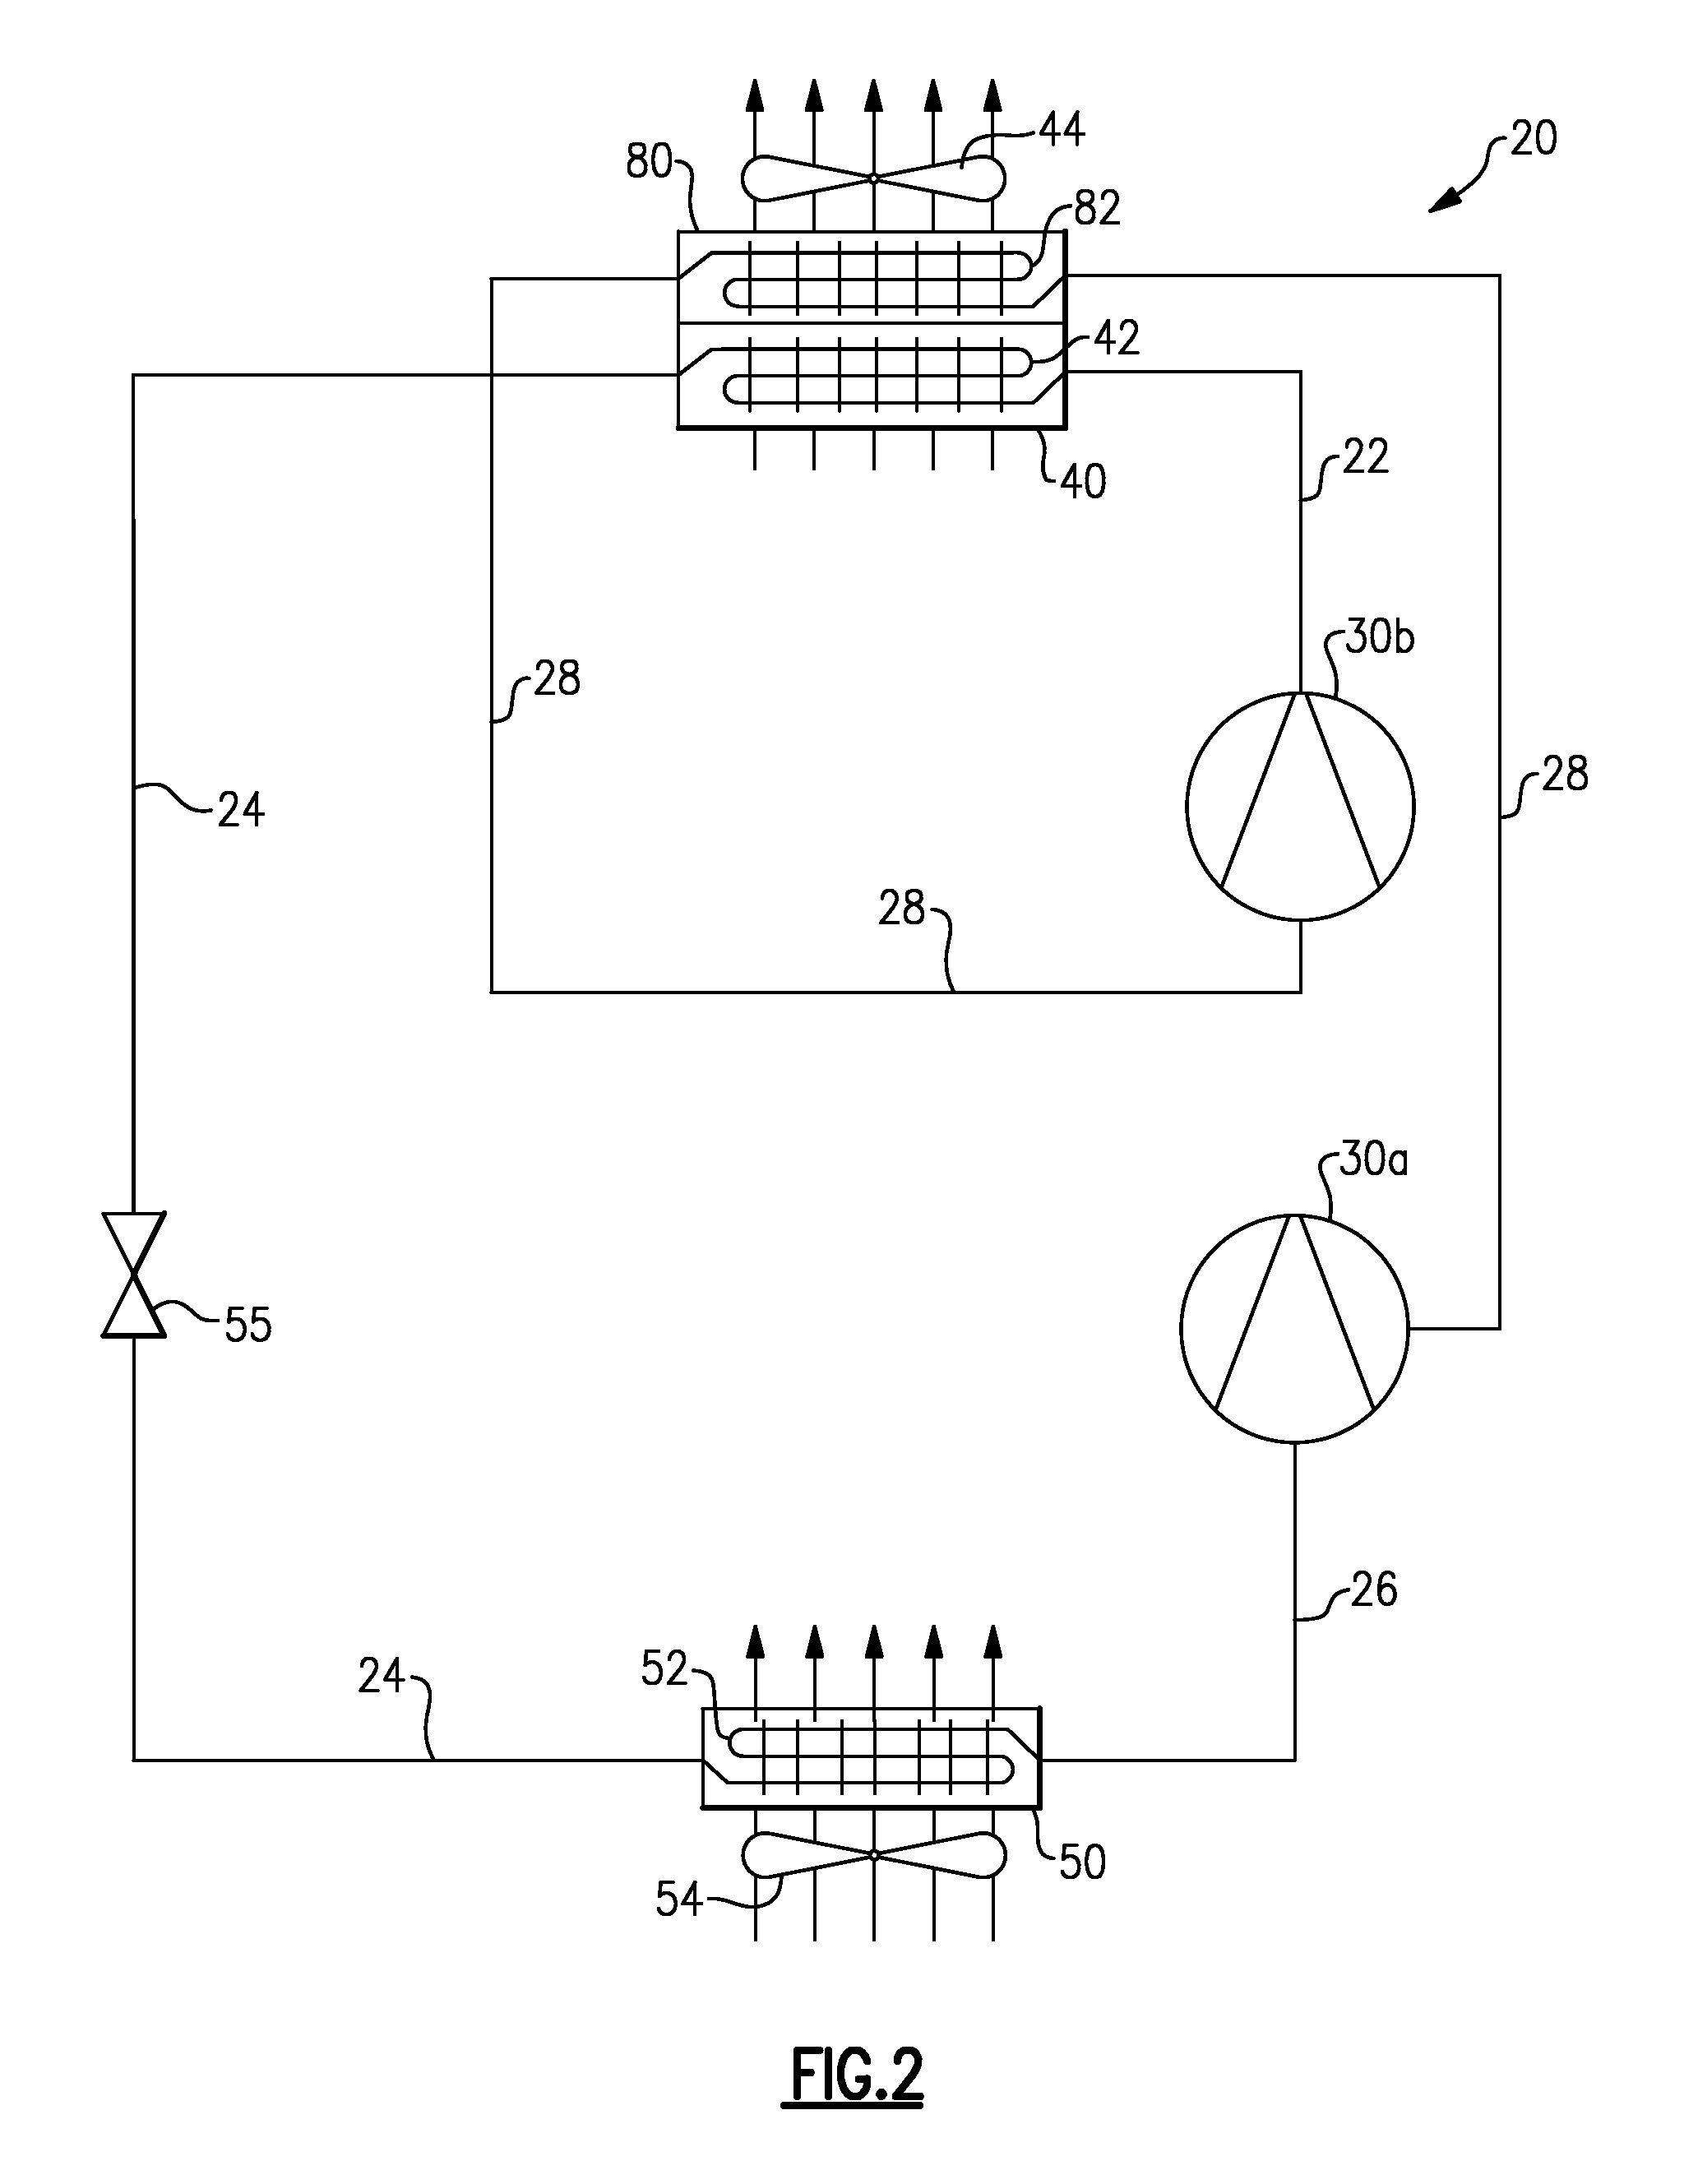 Refrigerant vapor compression system with intercooler